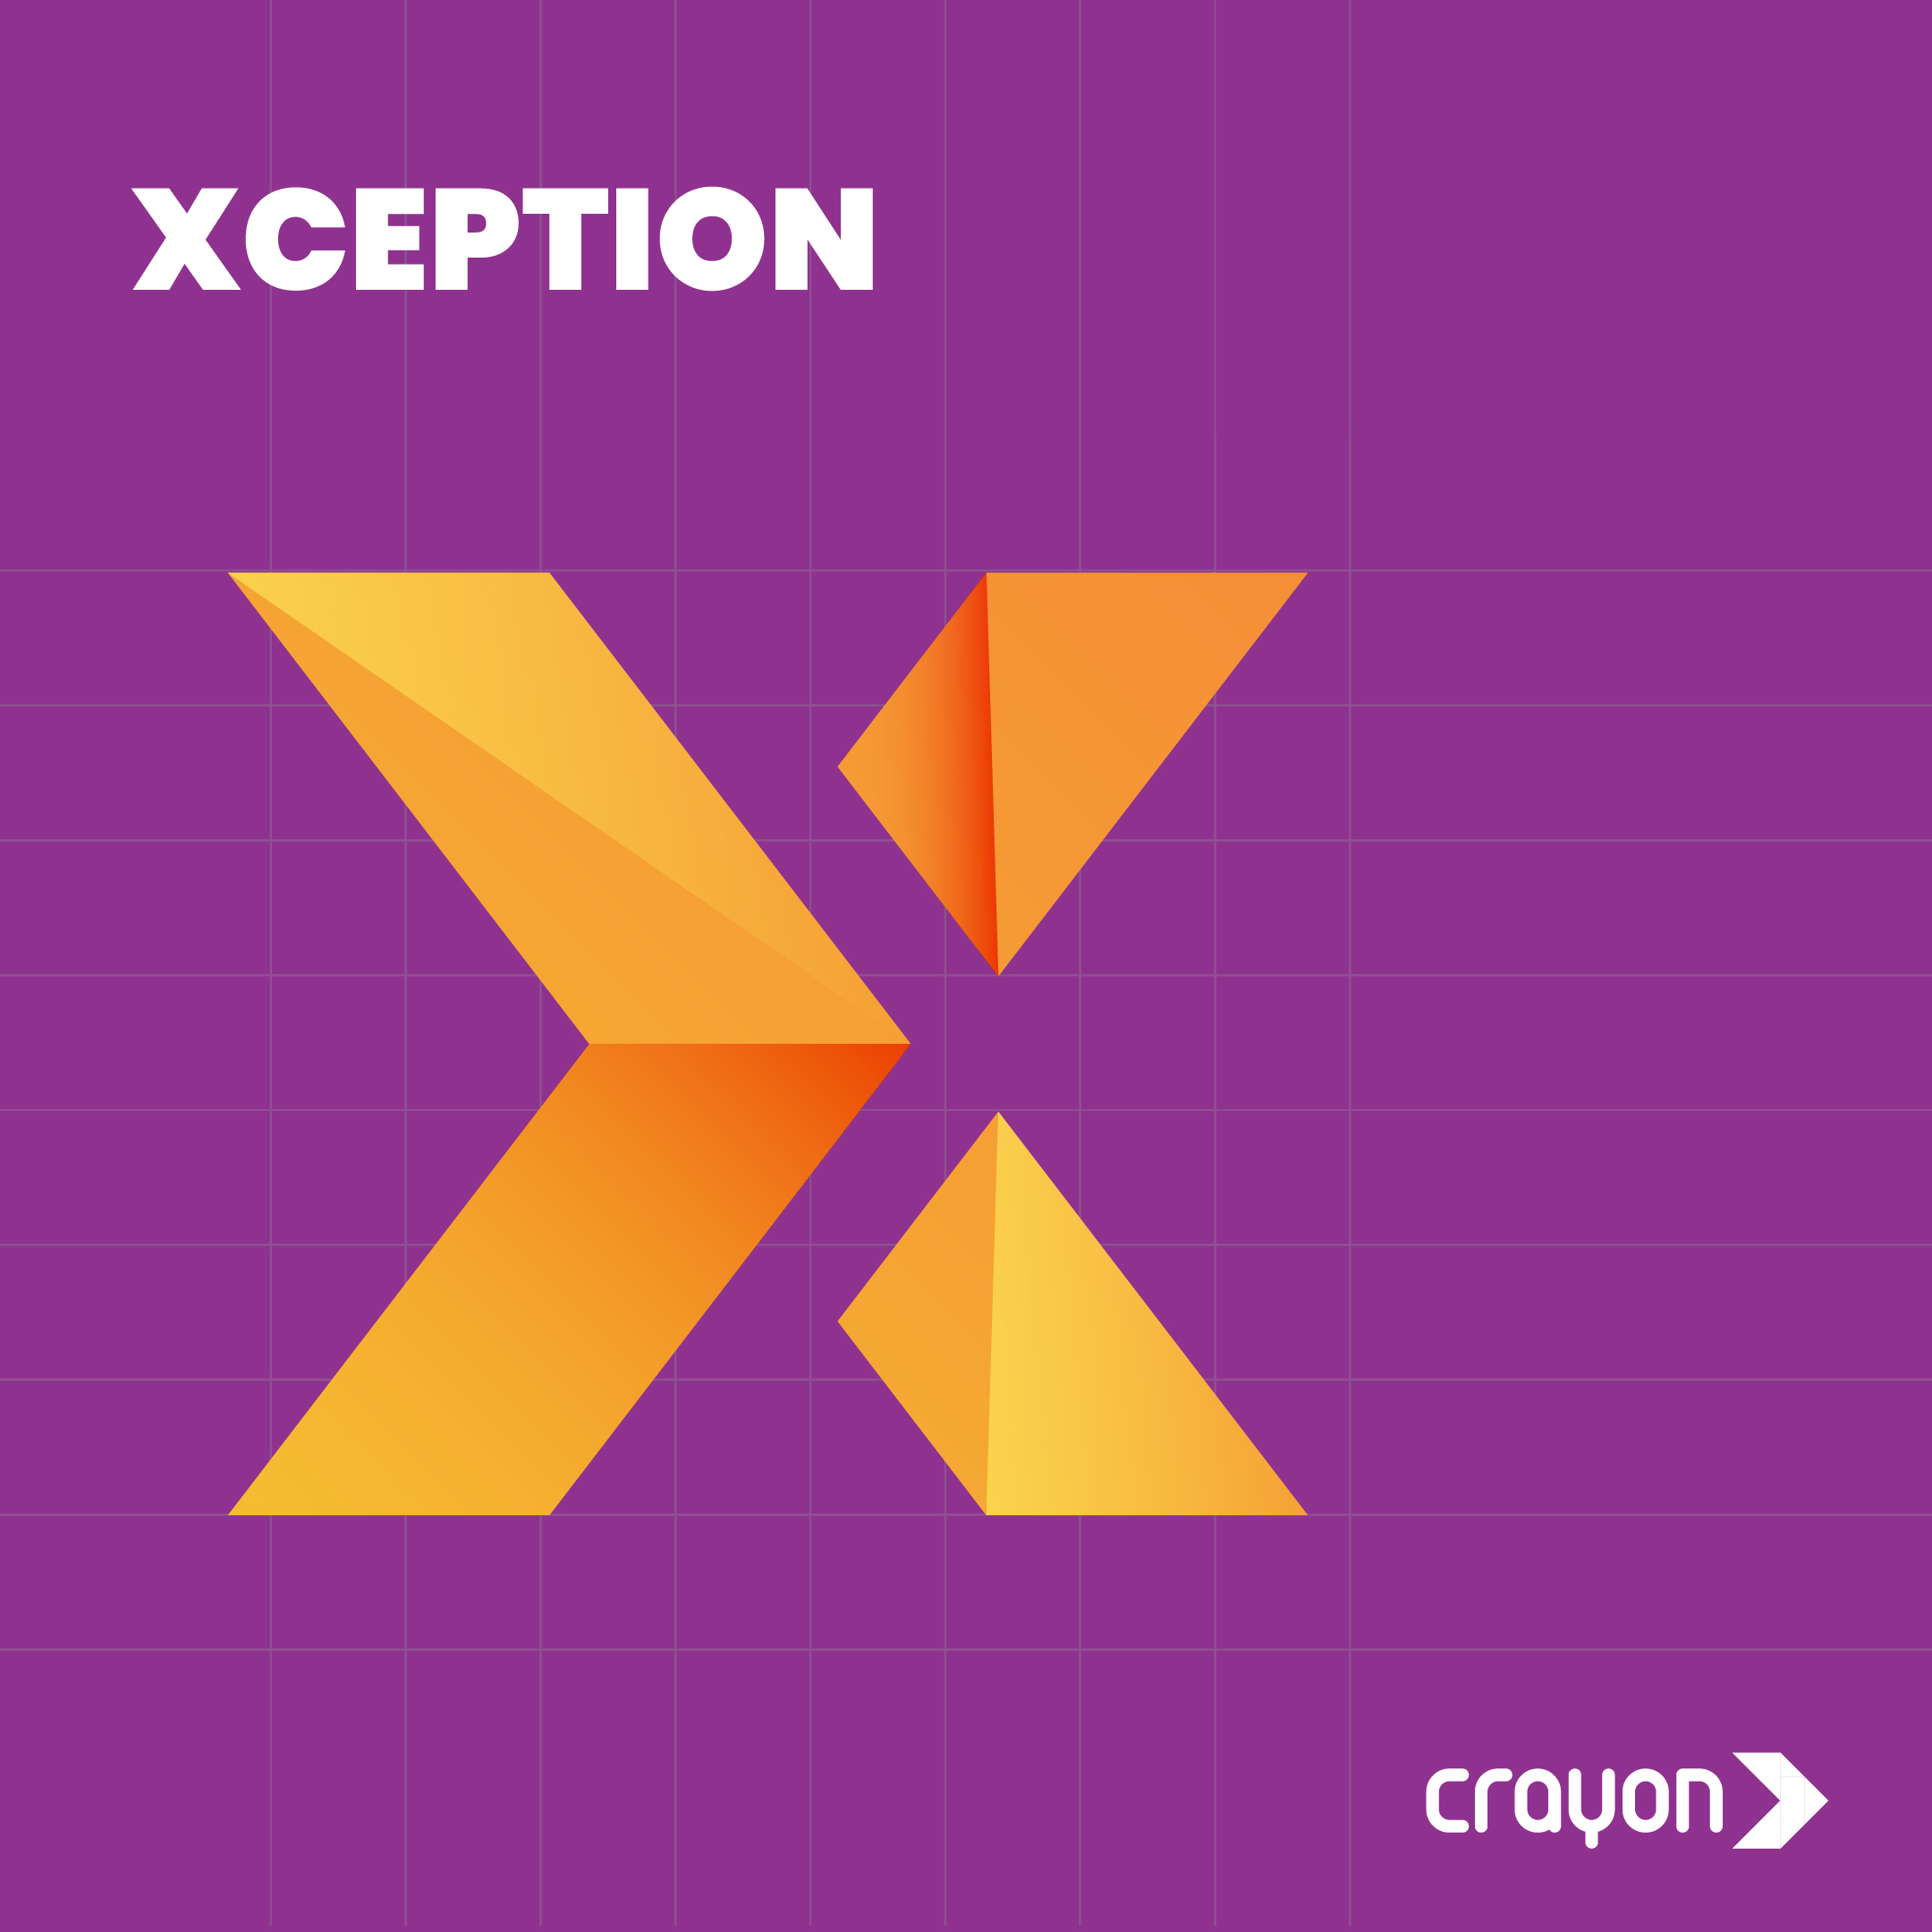 #TheAIAlphabet: X for Xception